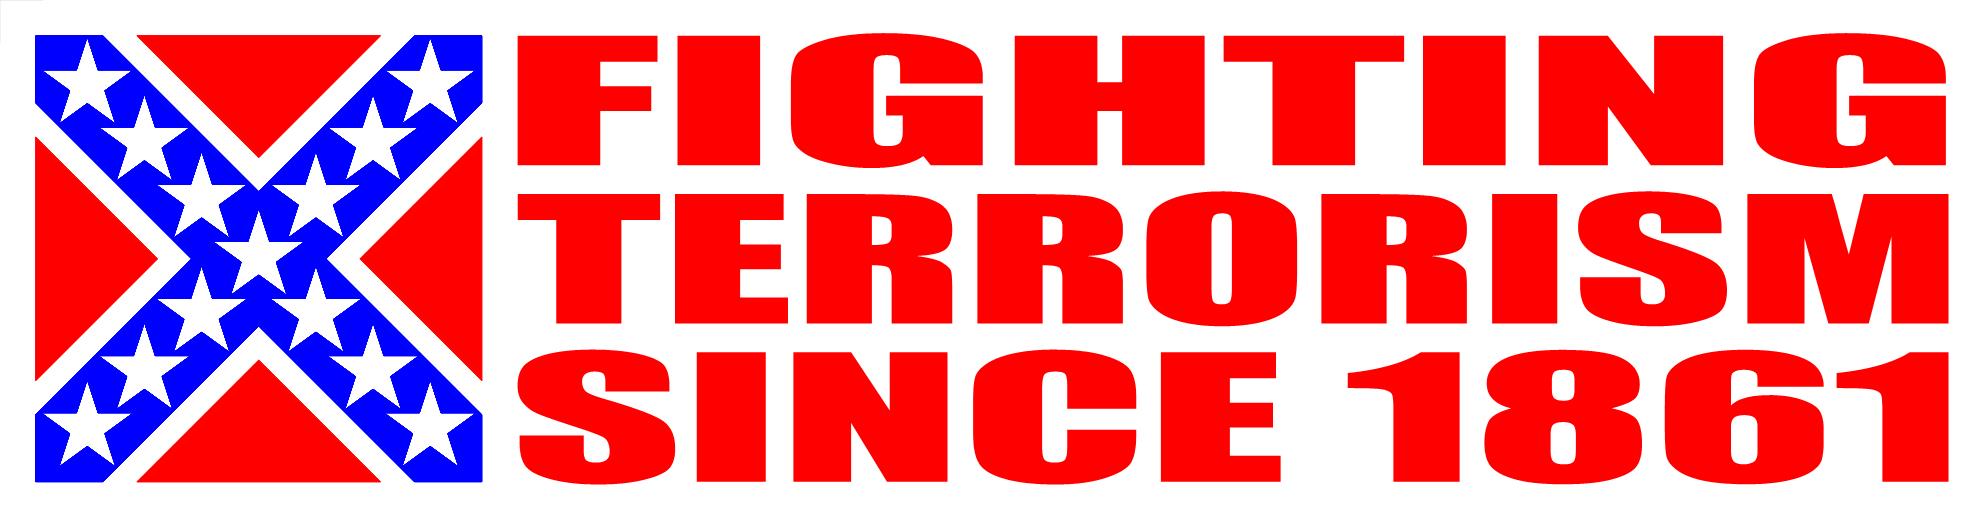 Fighting Terrorism Sticker